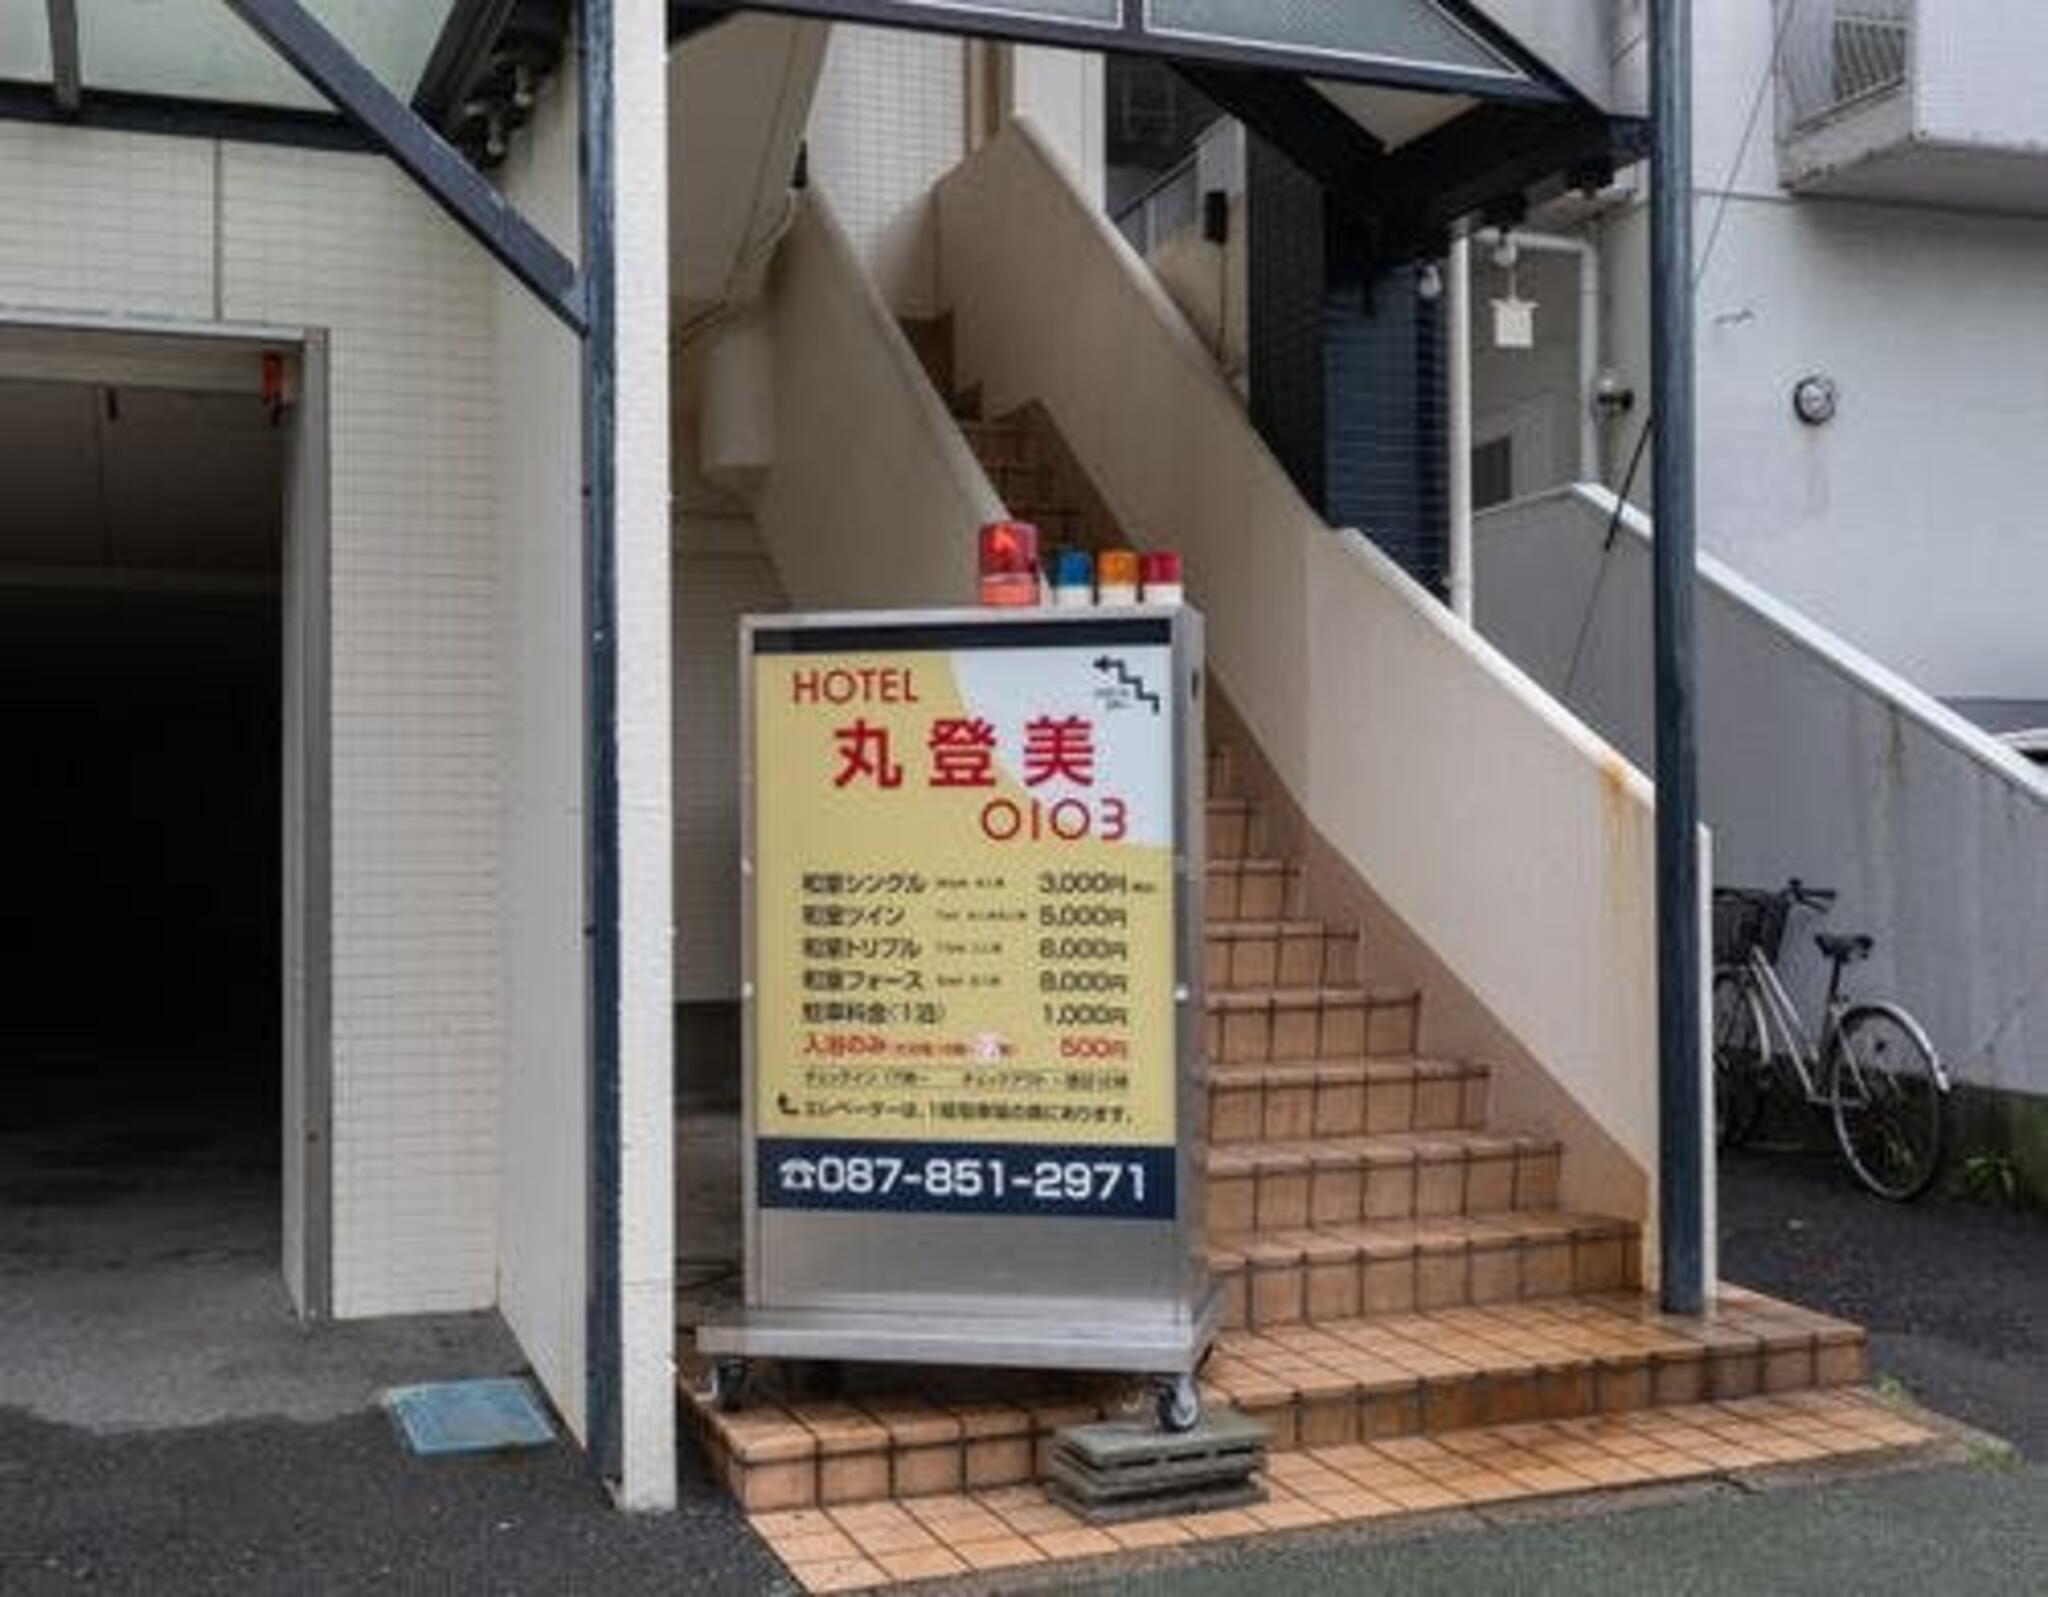 Tabist ビジネスホテル丸登美 高松 香川の代表写真5